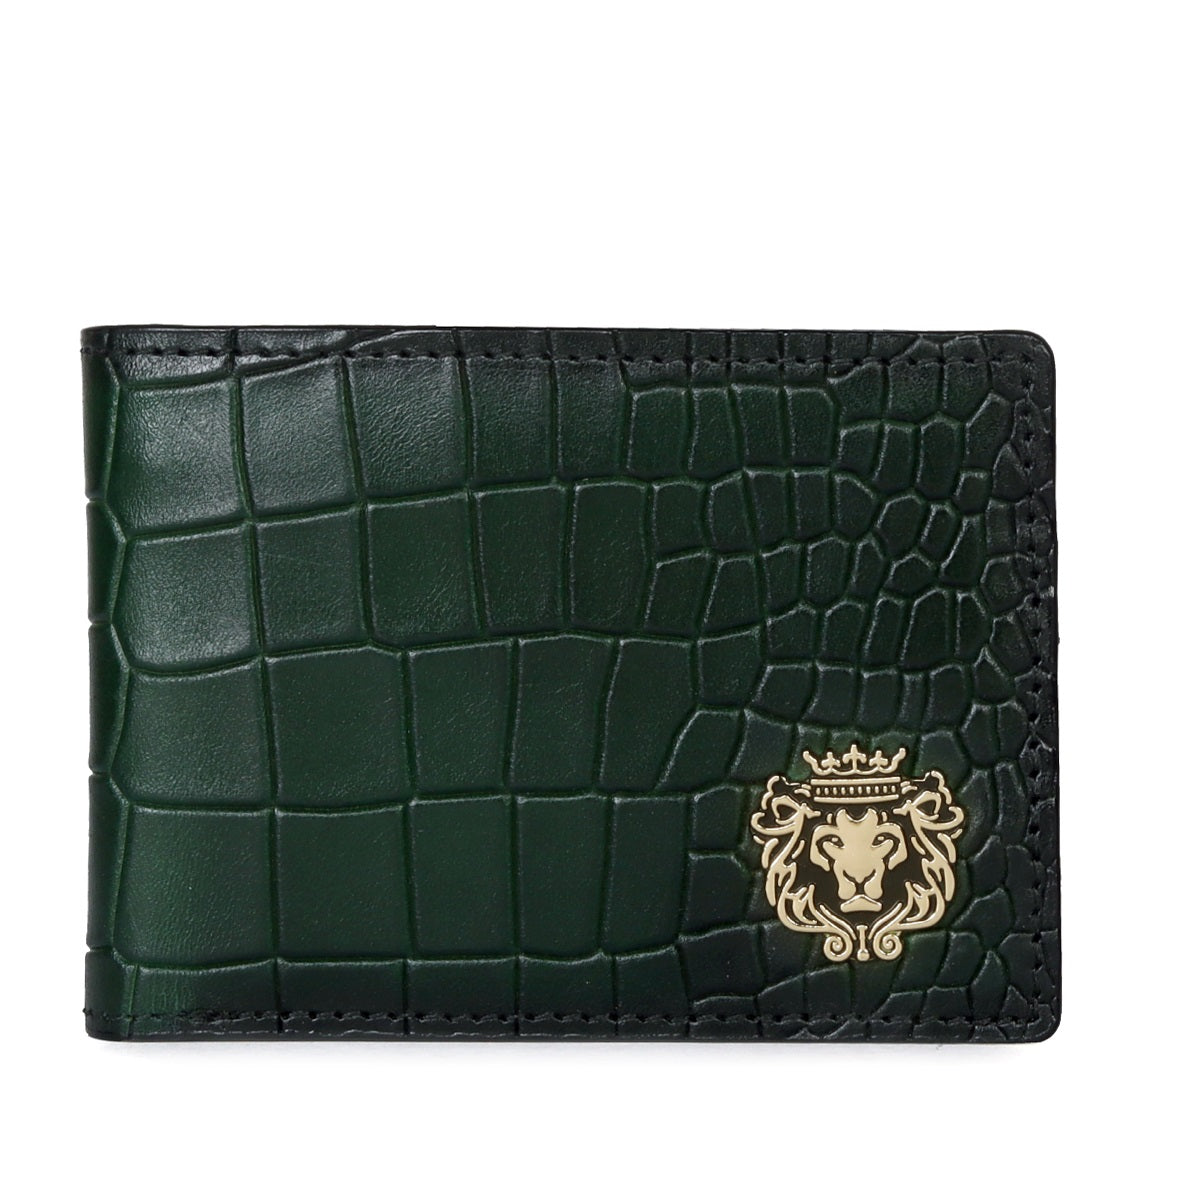 Green Bi-Fold Wallet in Deep Cut Croco Textured Leather